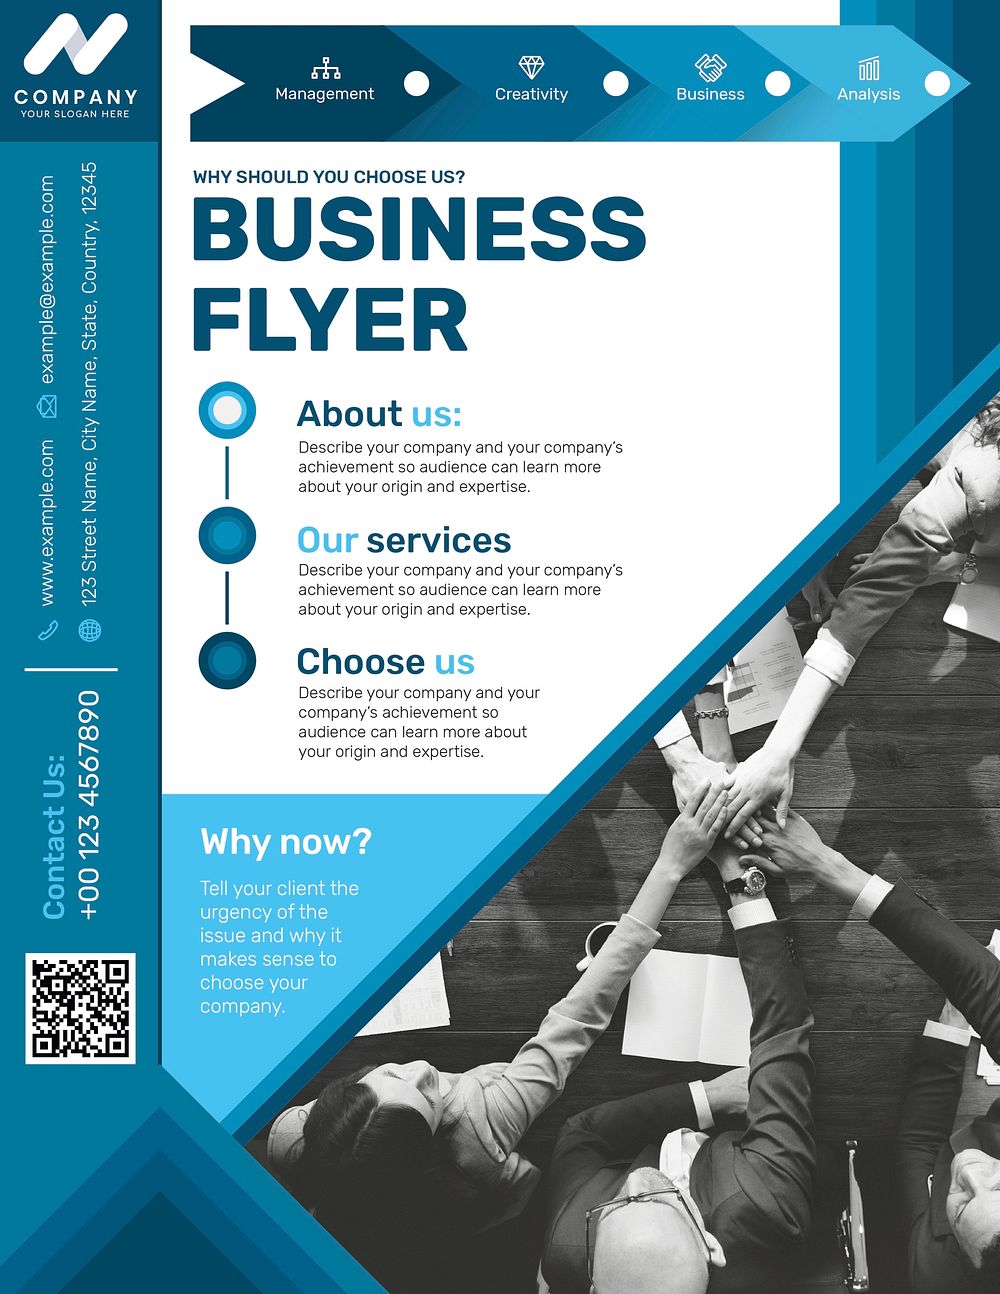 Blue business flyer template vector in modern design